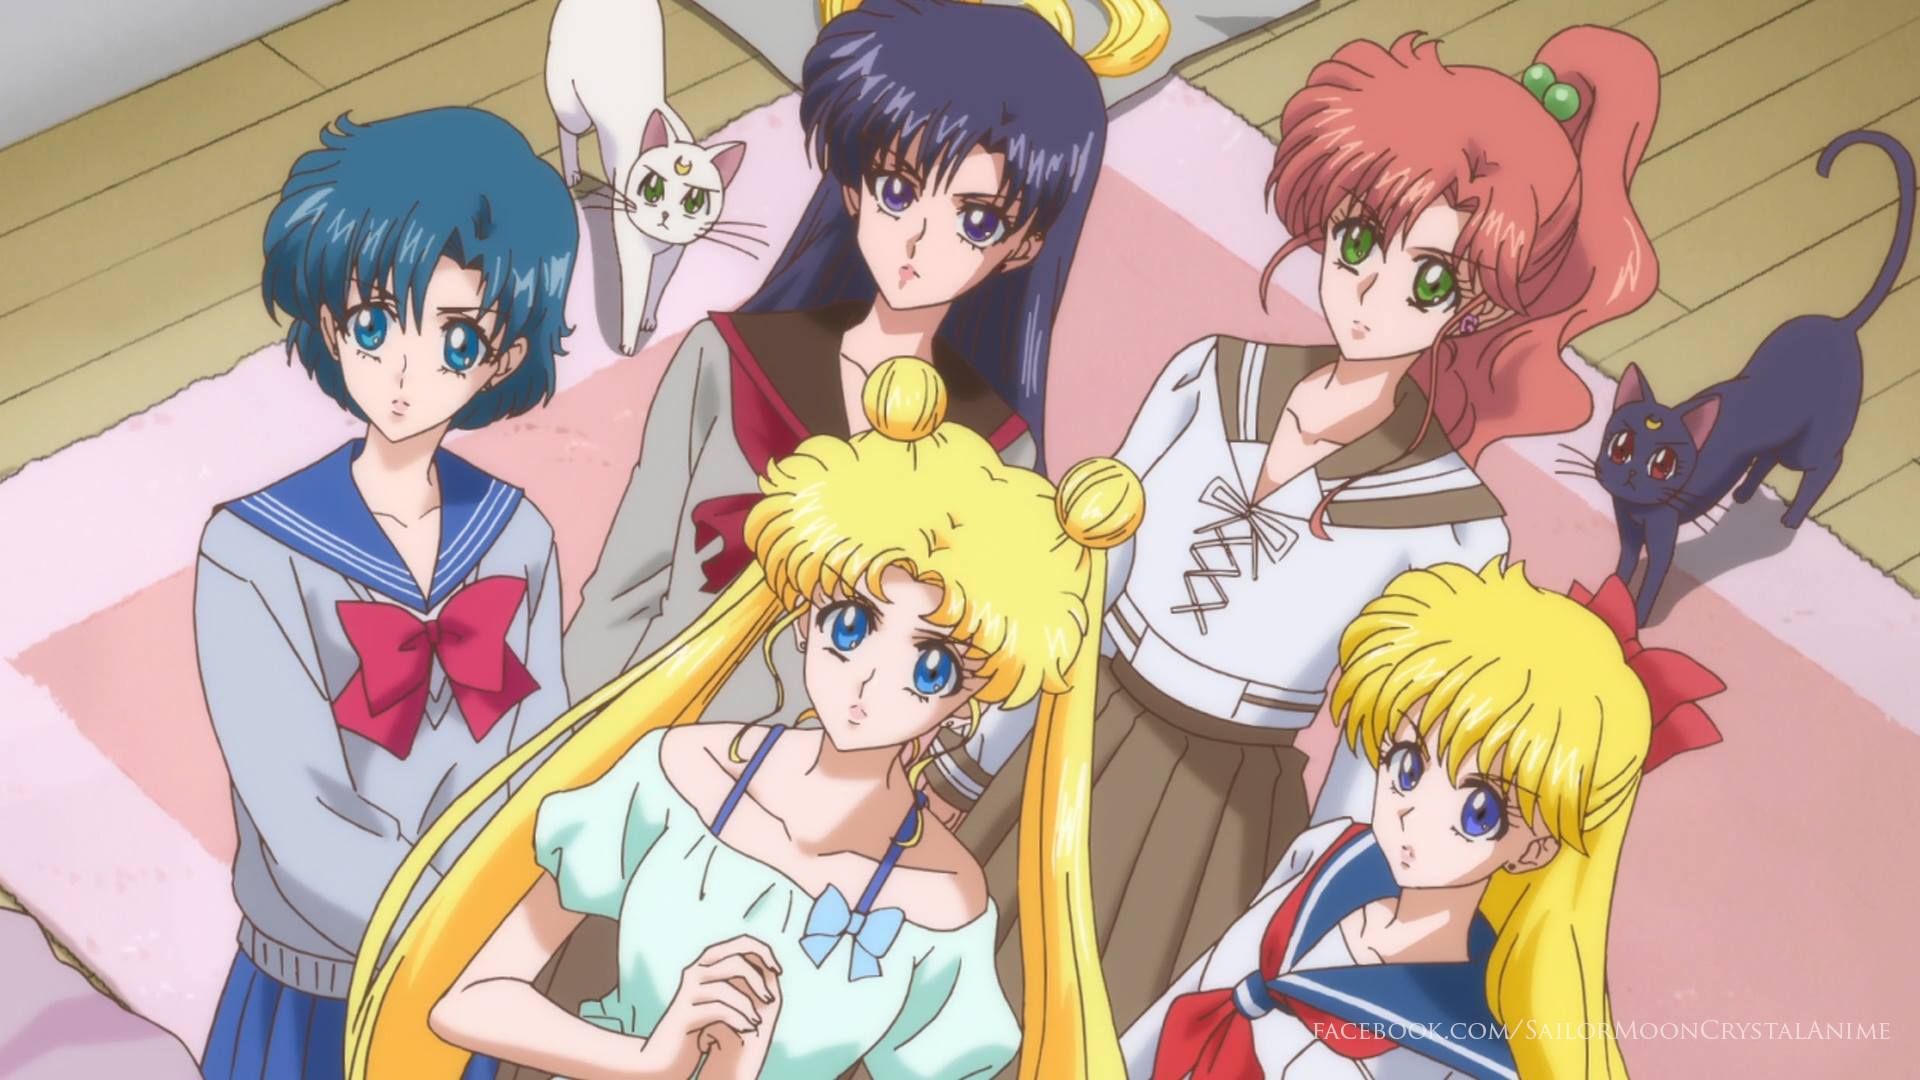 Netflix Streams Sailor Moon Crystal on July 1 - News - Anime News